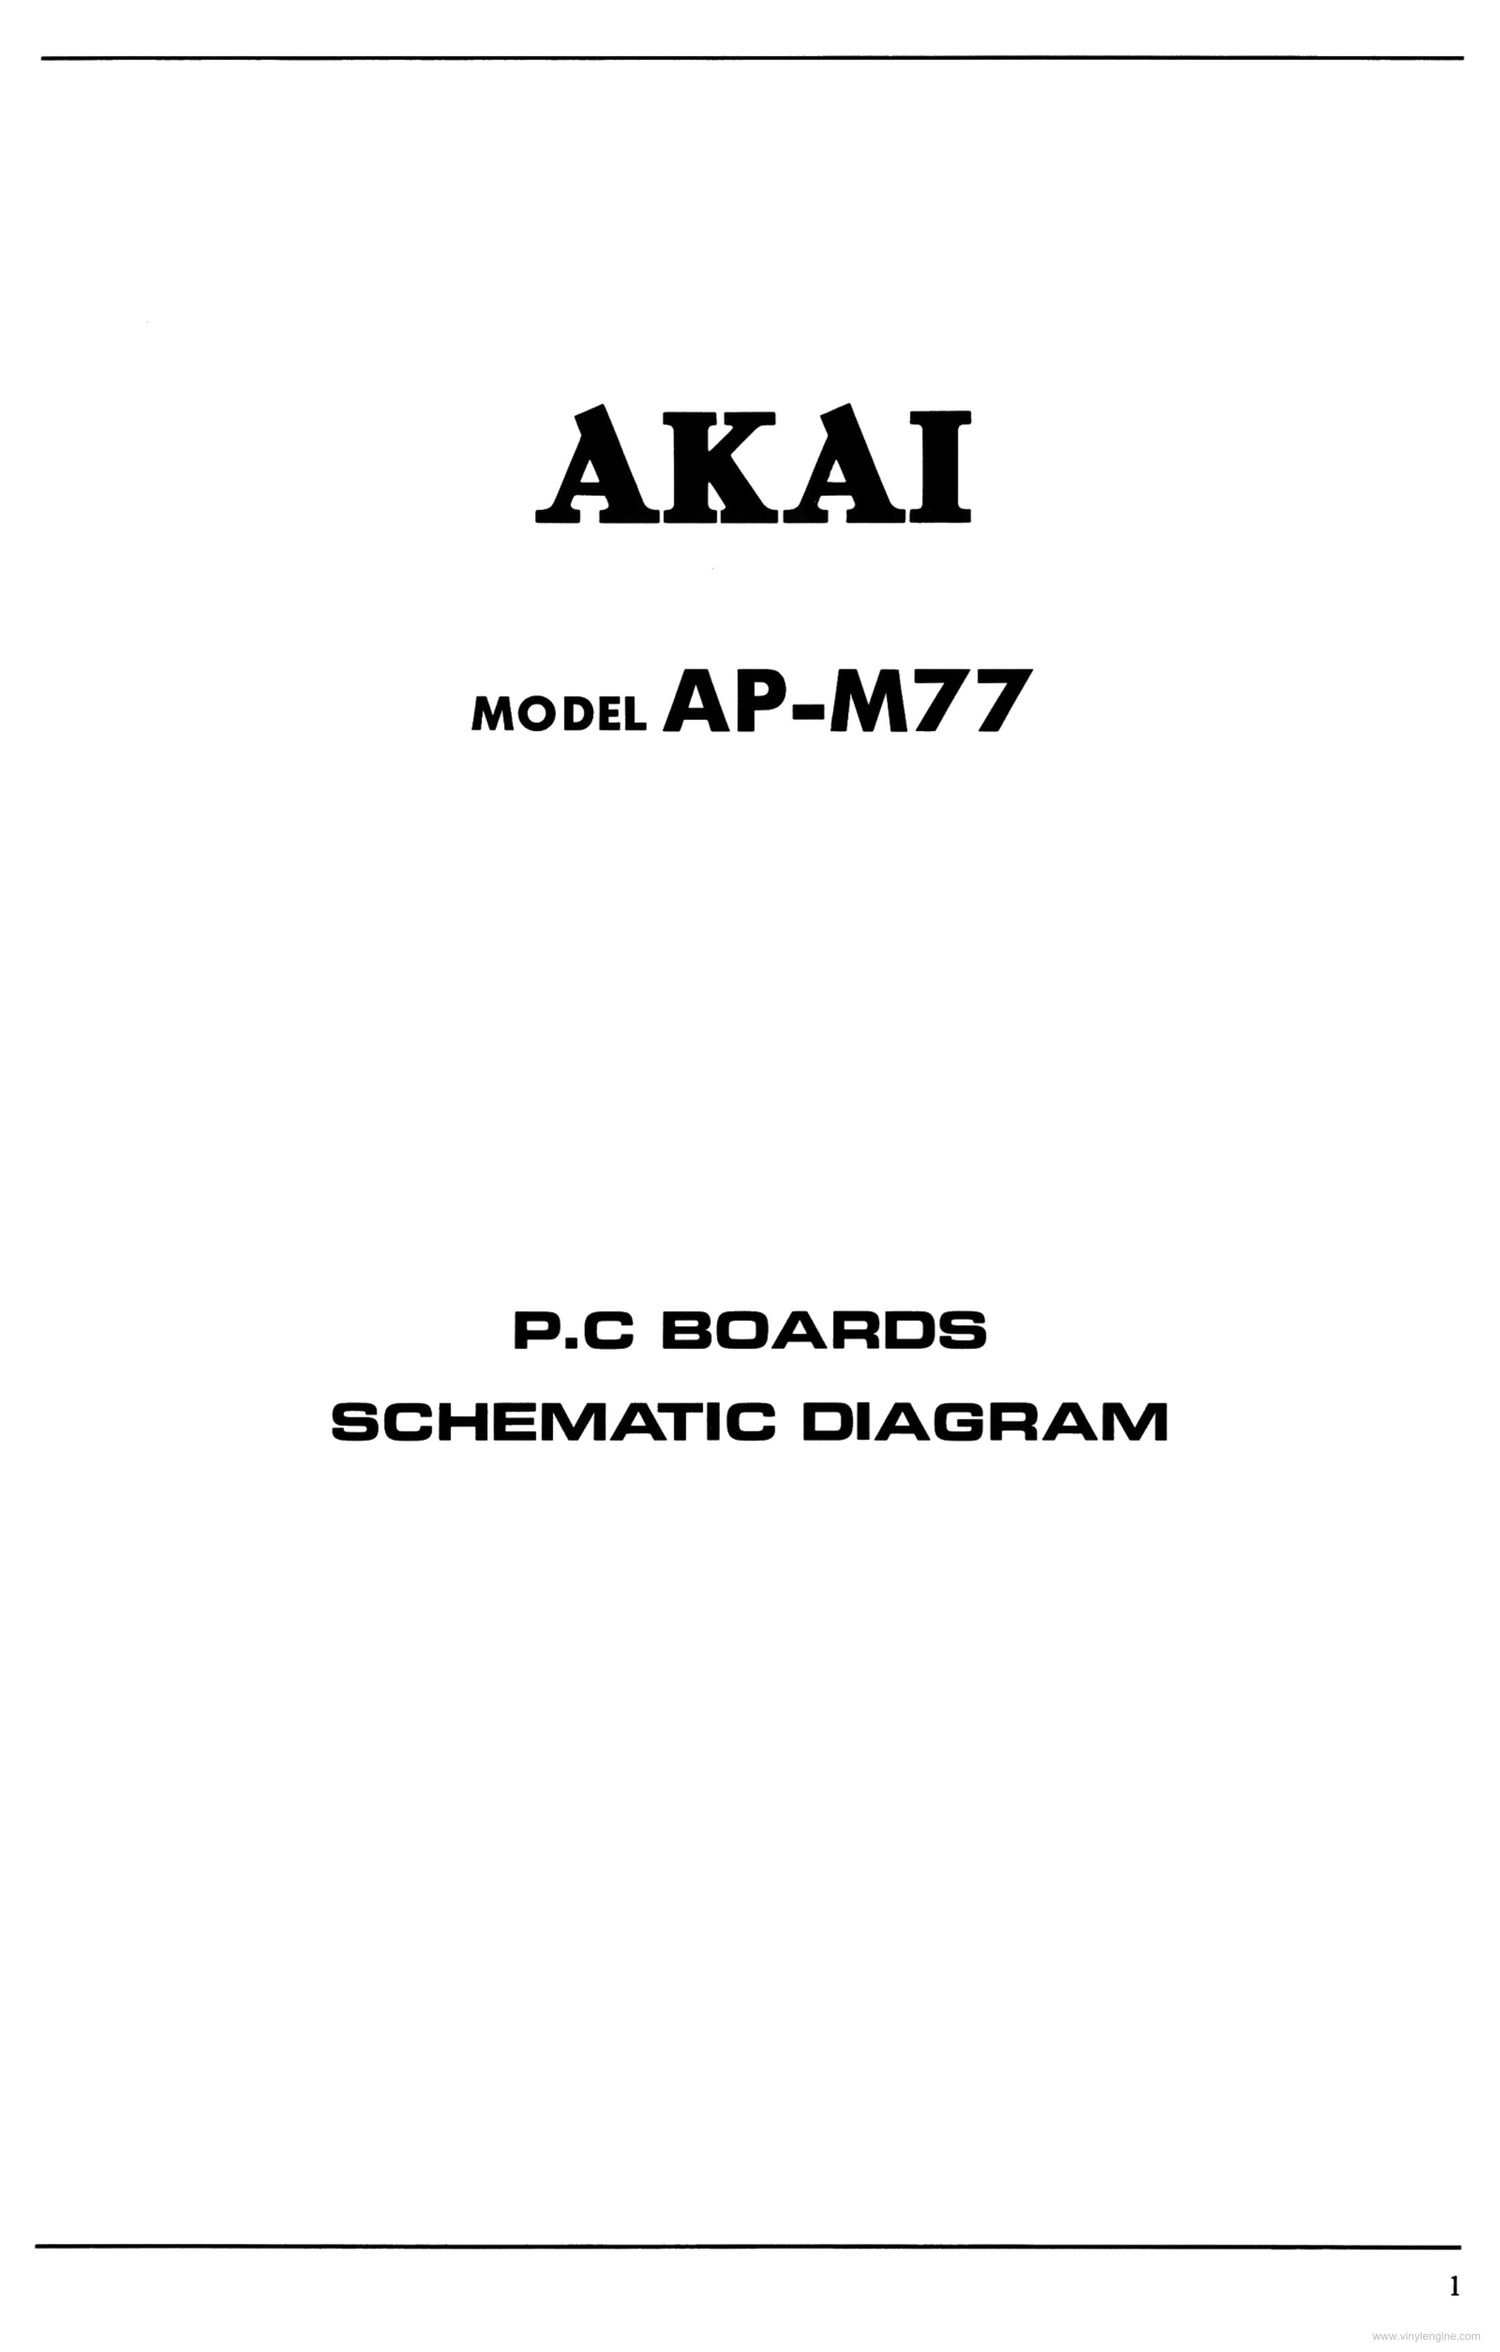 Akai AP M77 Schematic